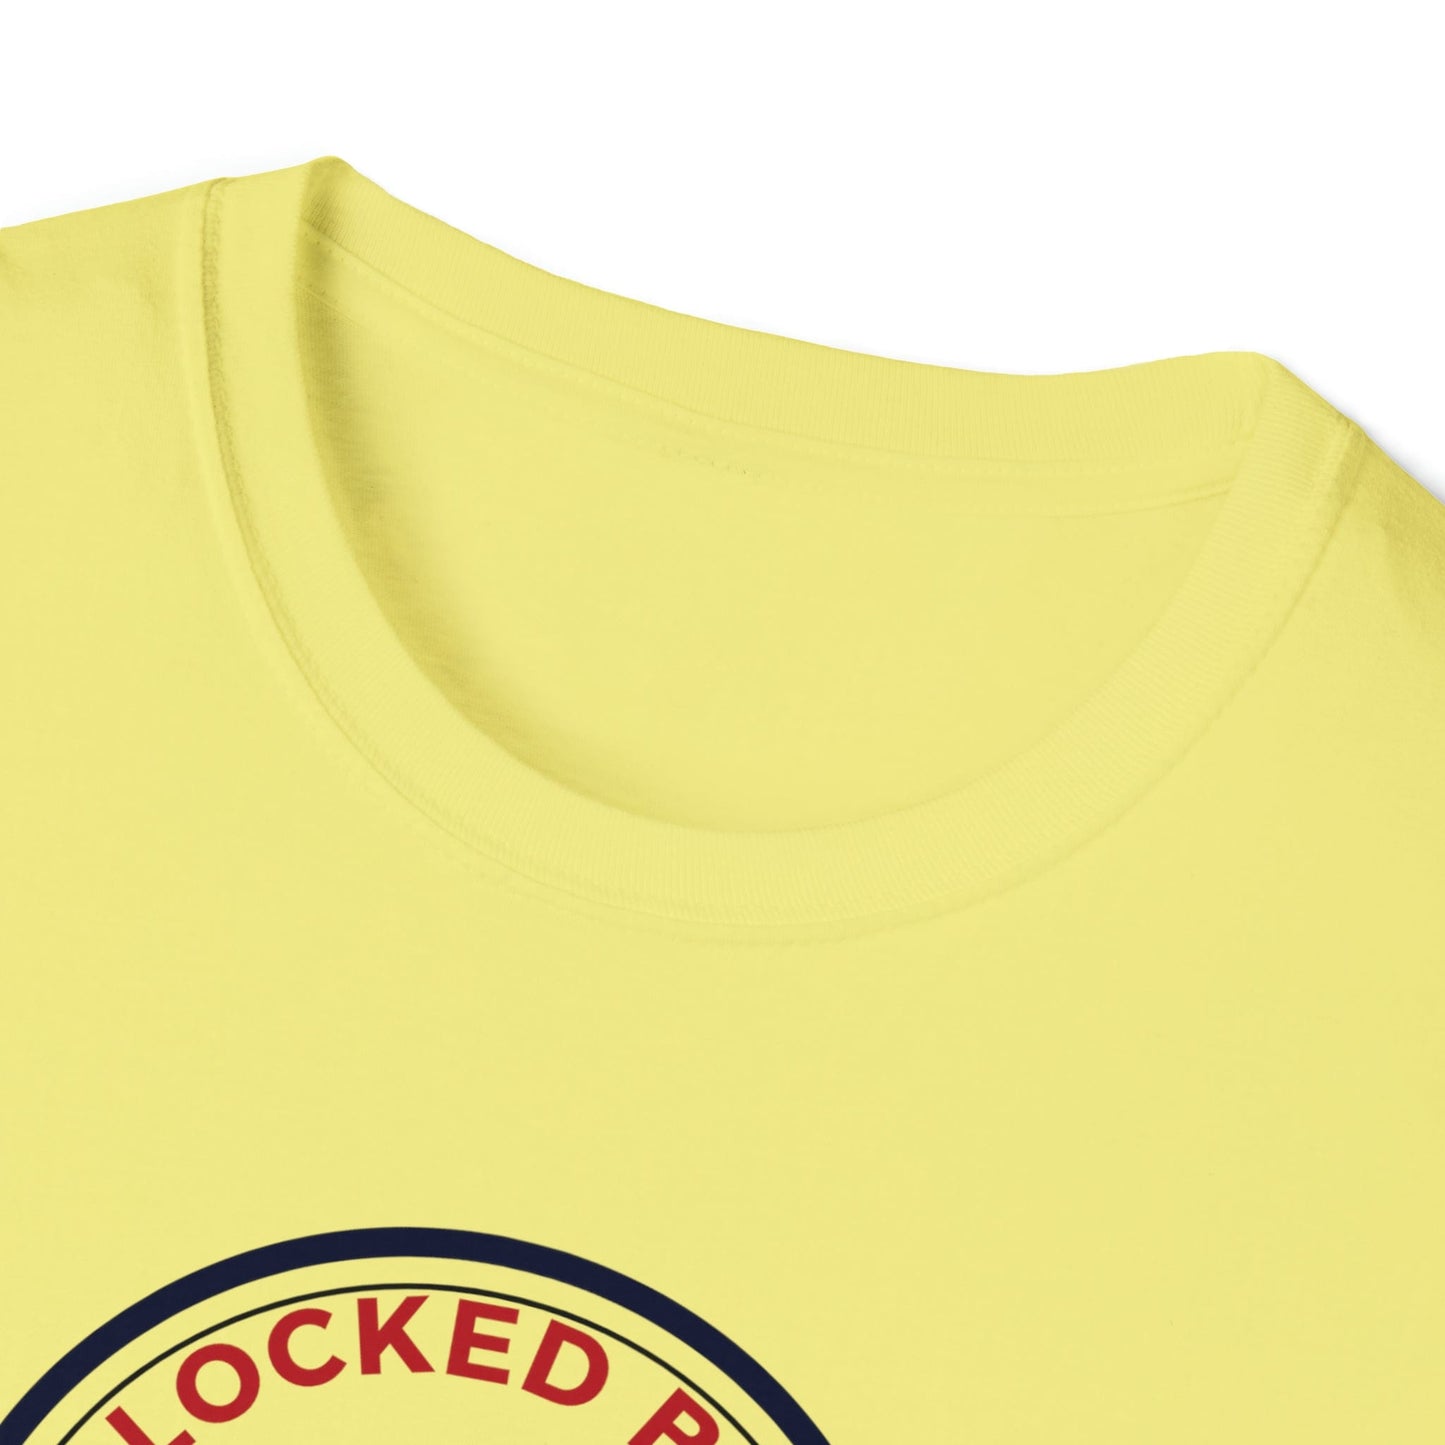 T-Shirt LockedBoy Sports Club - Chastity Tshirt Boxing Glove LEATHERDADDY BATOR